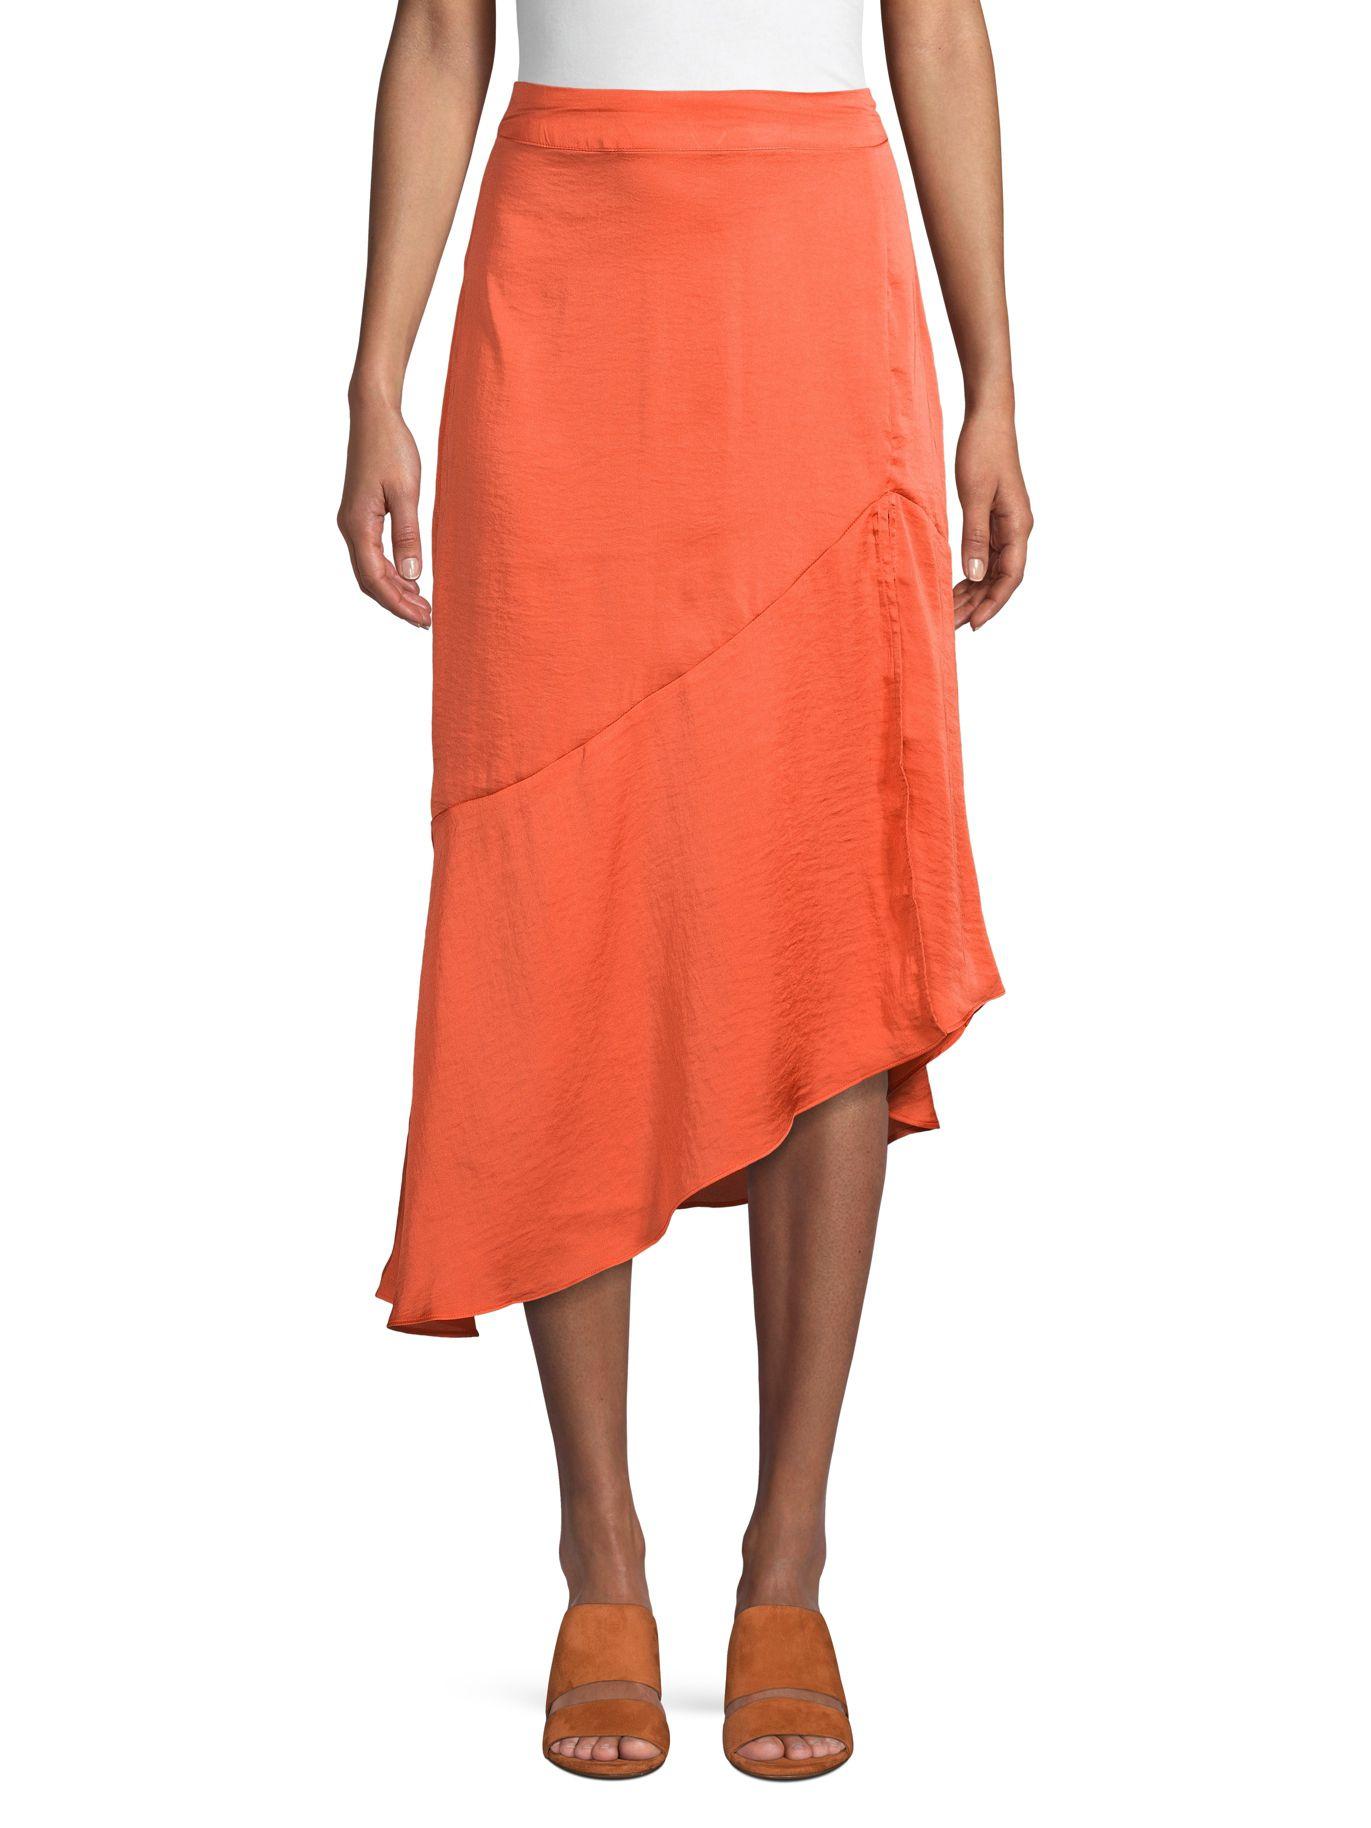 Free People Lola Asymmetrical Slit Skirt in Orange - Lyst